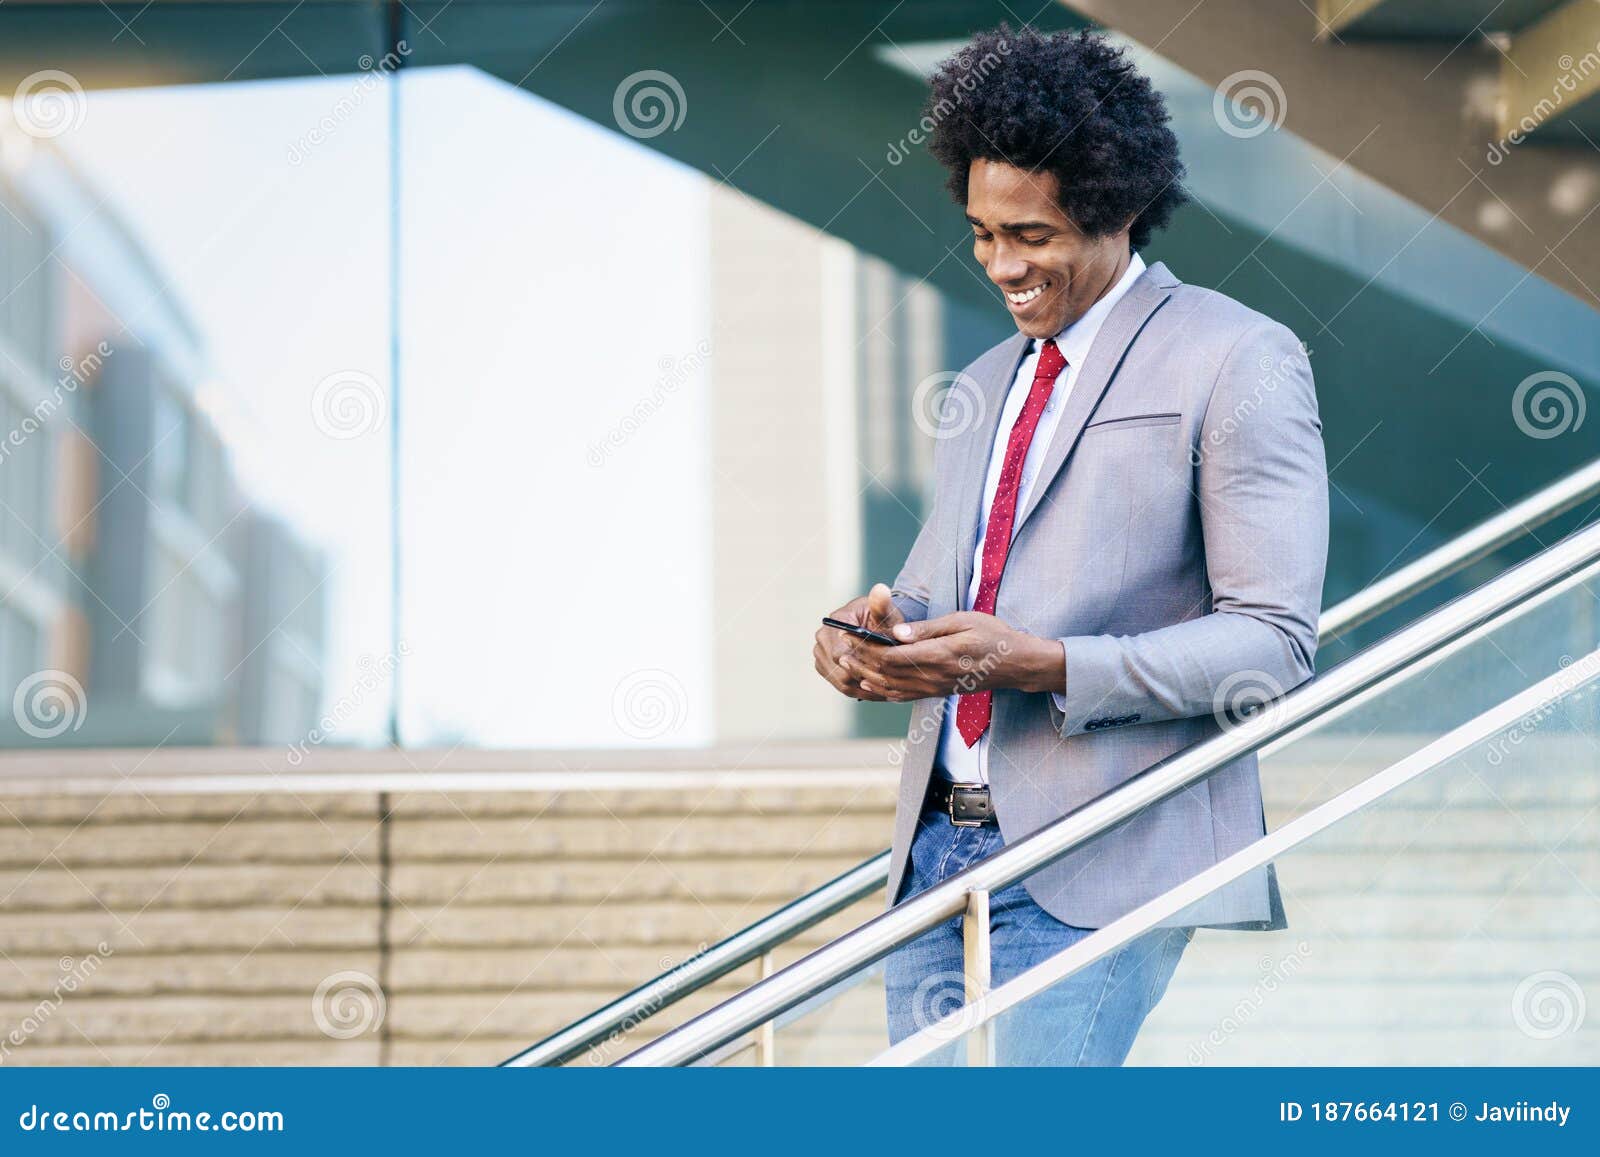 black businessman using a smartphone near an office building